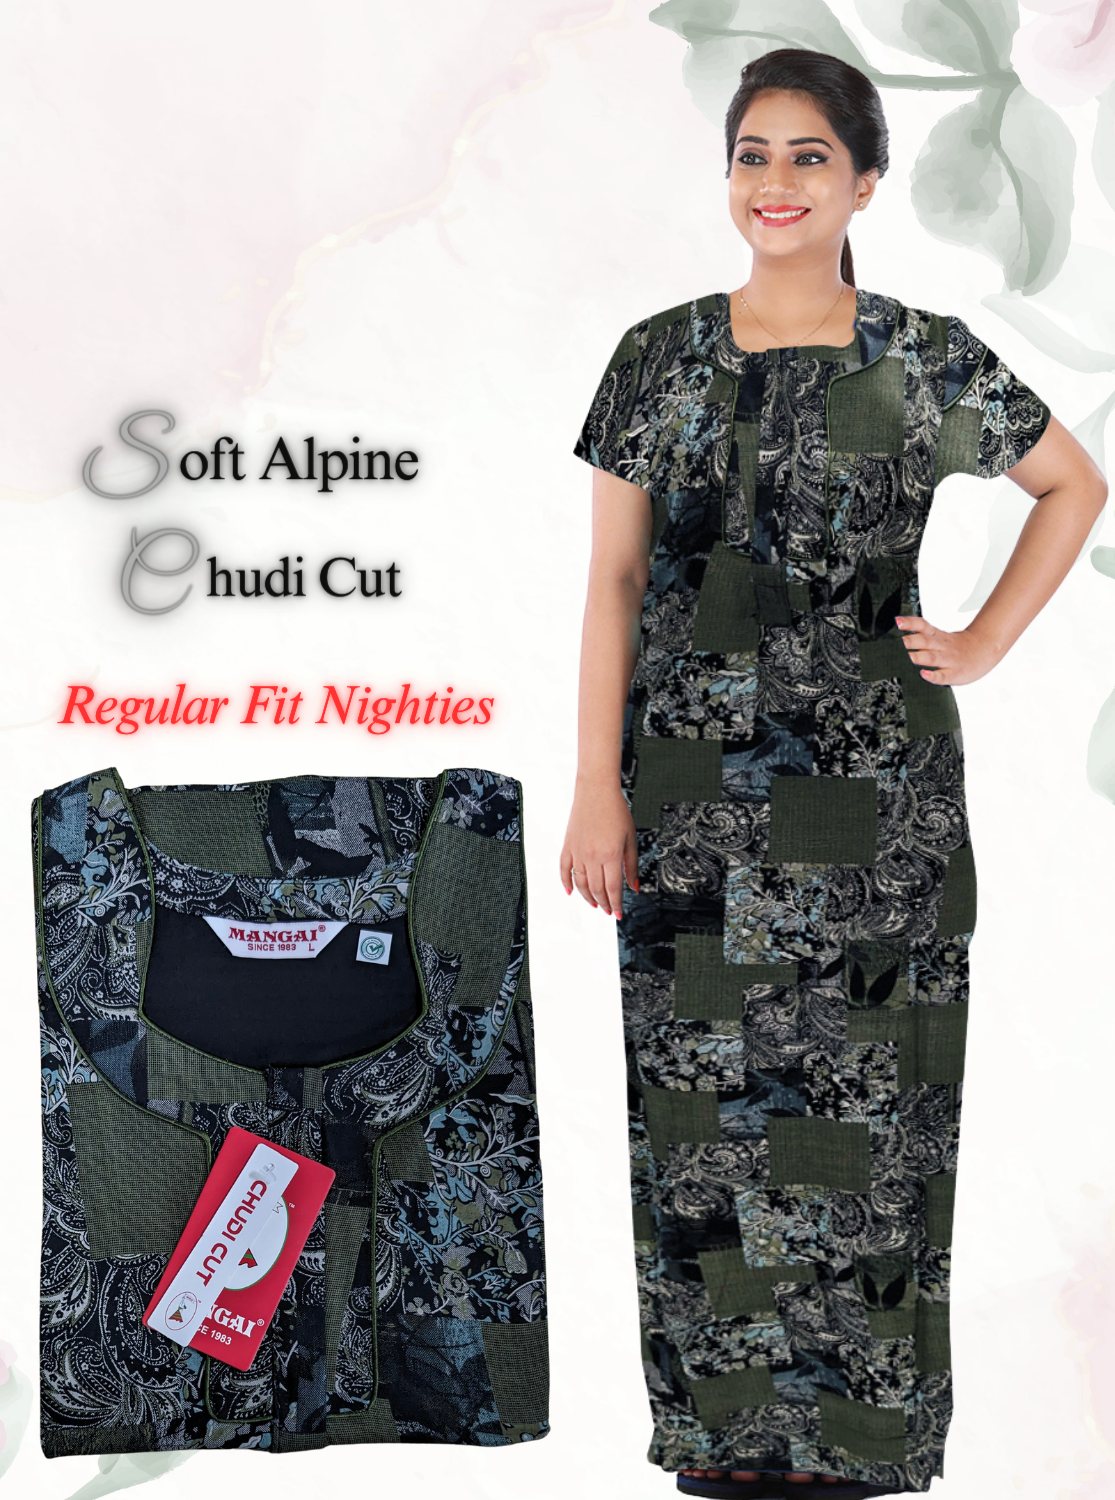 MANGAI New Alpine Printed Nighties - All Over Printed Stylish Nightwear for Stylish Women | Beautiful Nighties for Stylish Women's